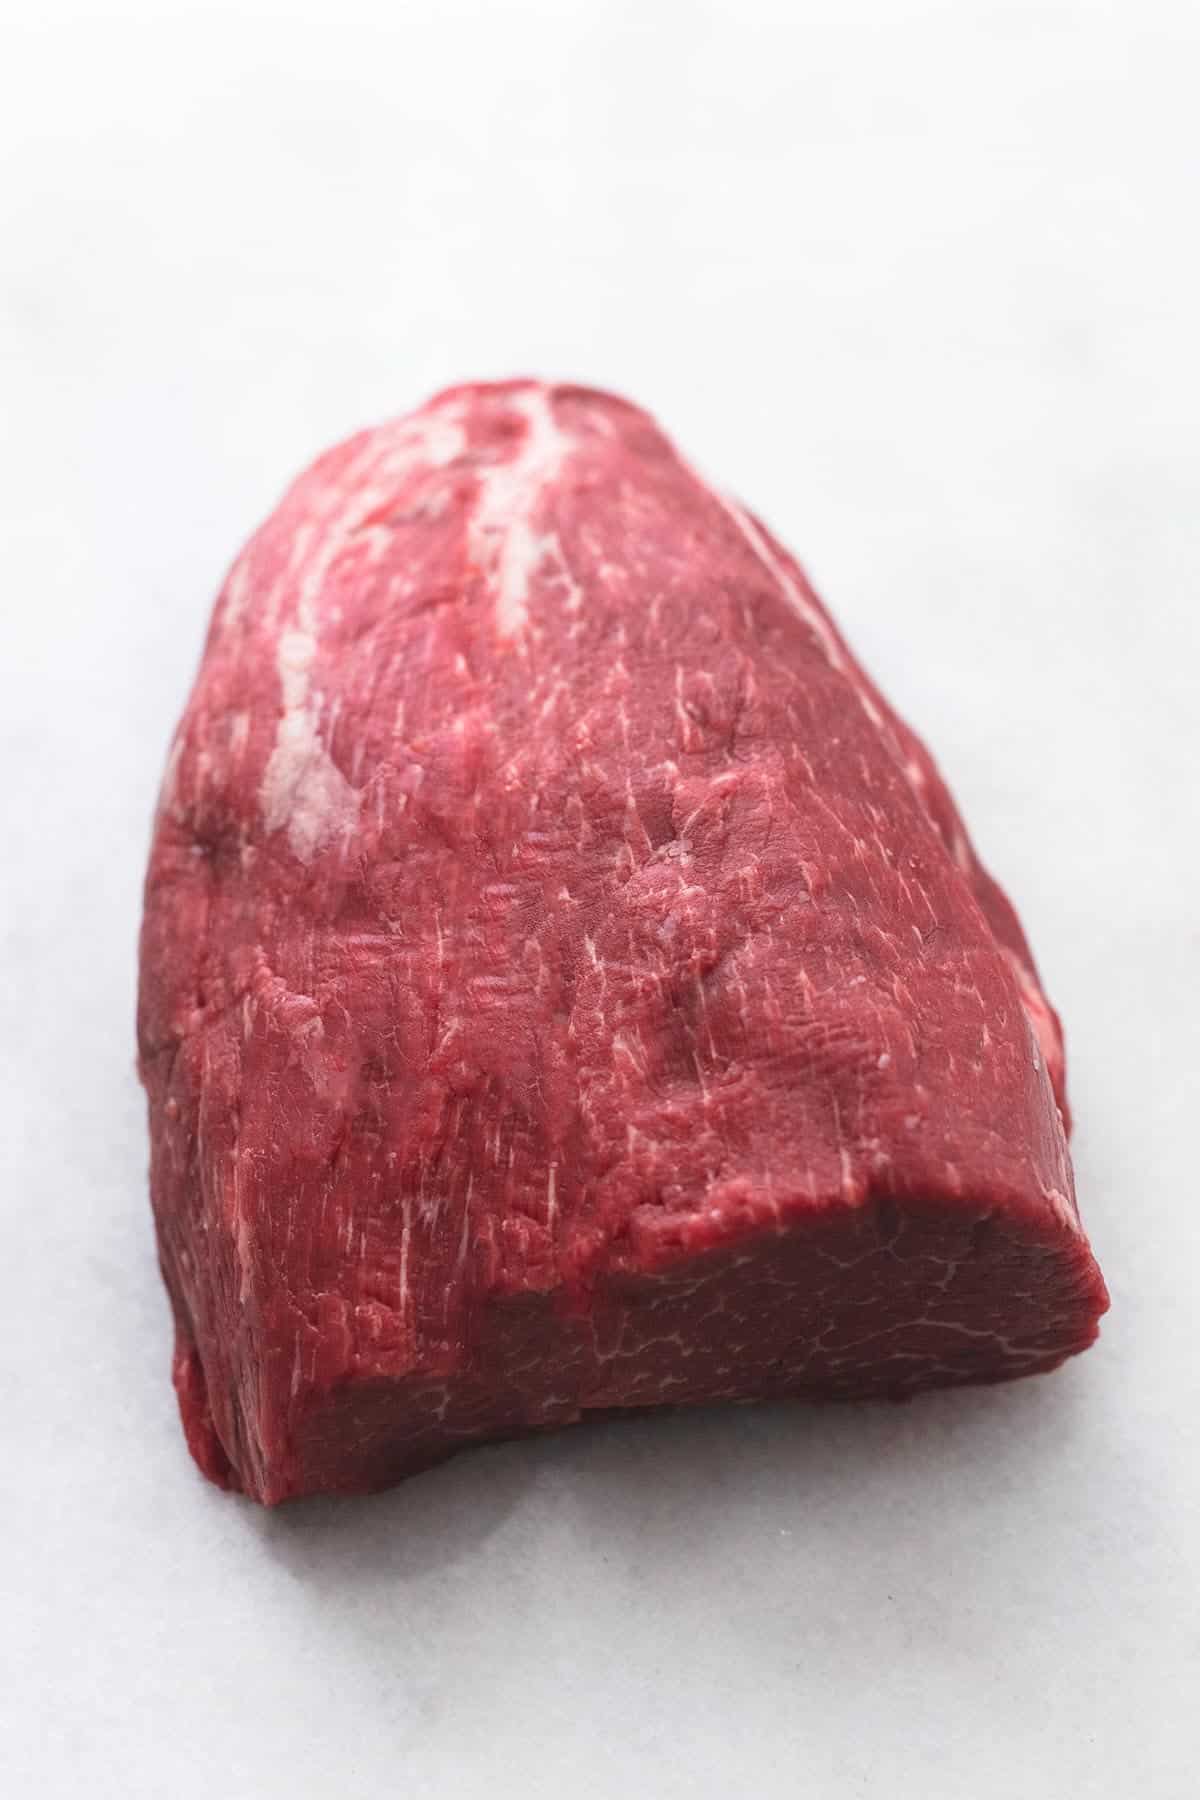 fresh beef tenderloin roast raw on marble tabletop